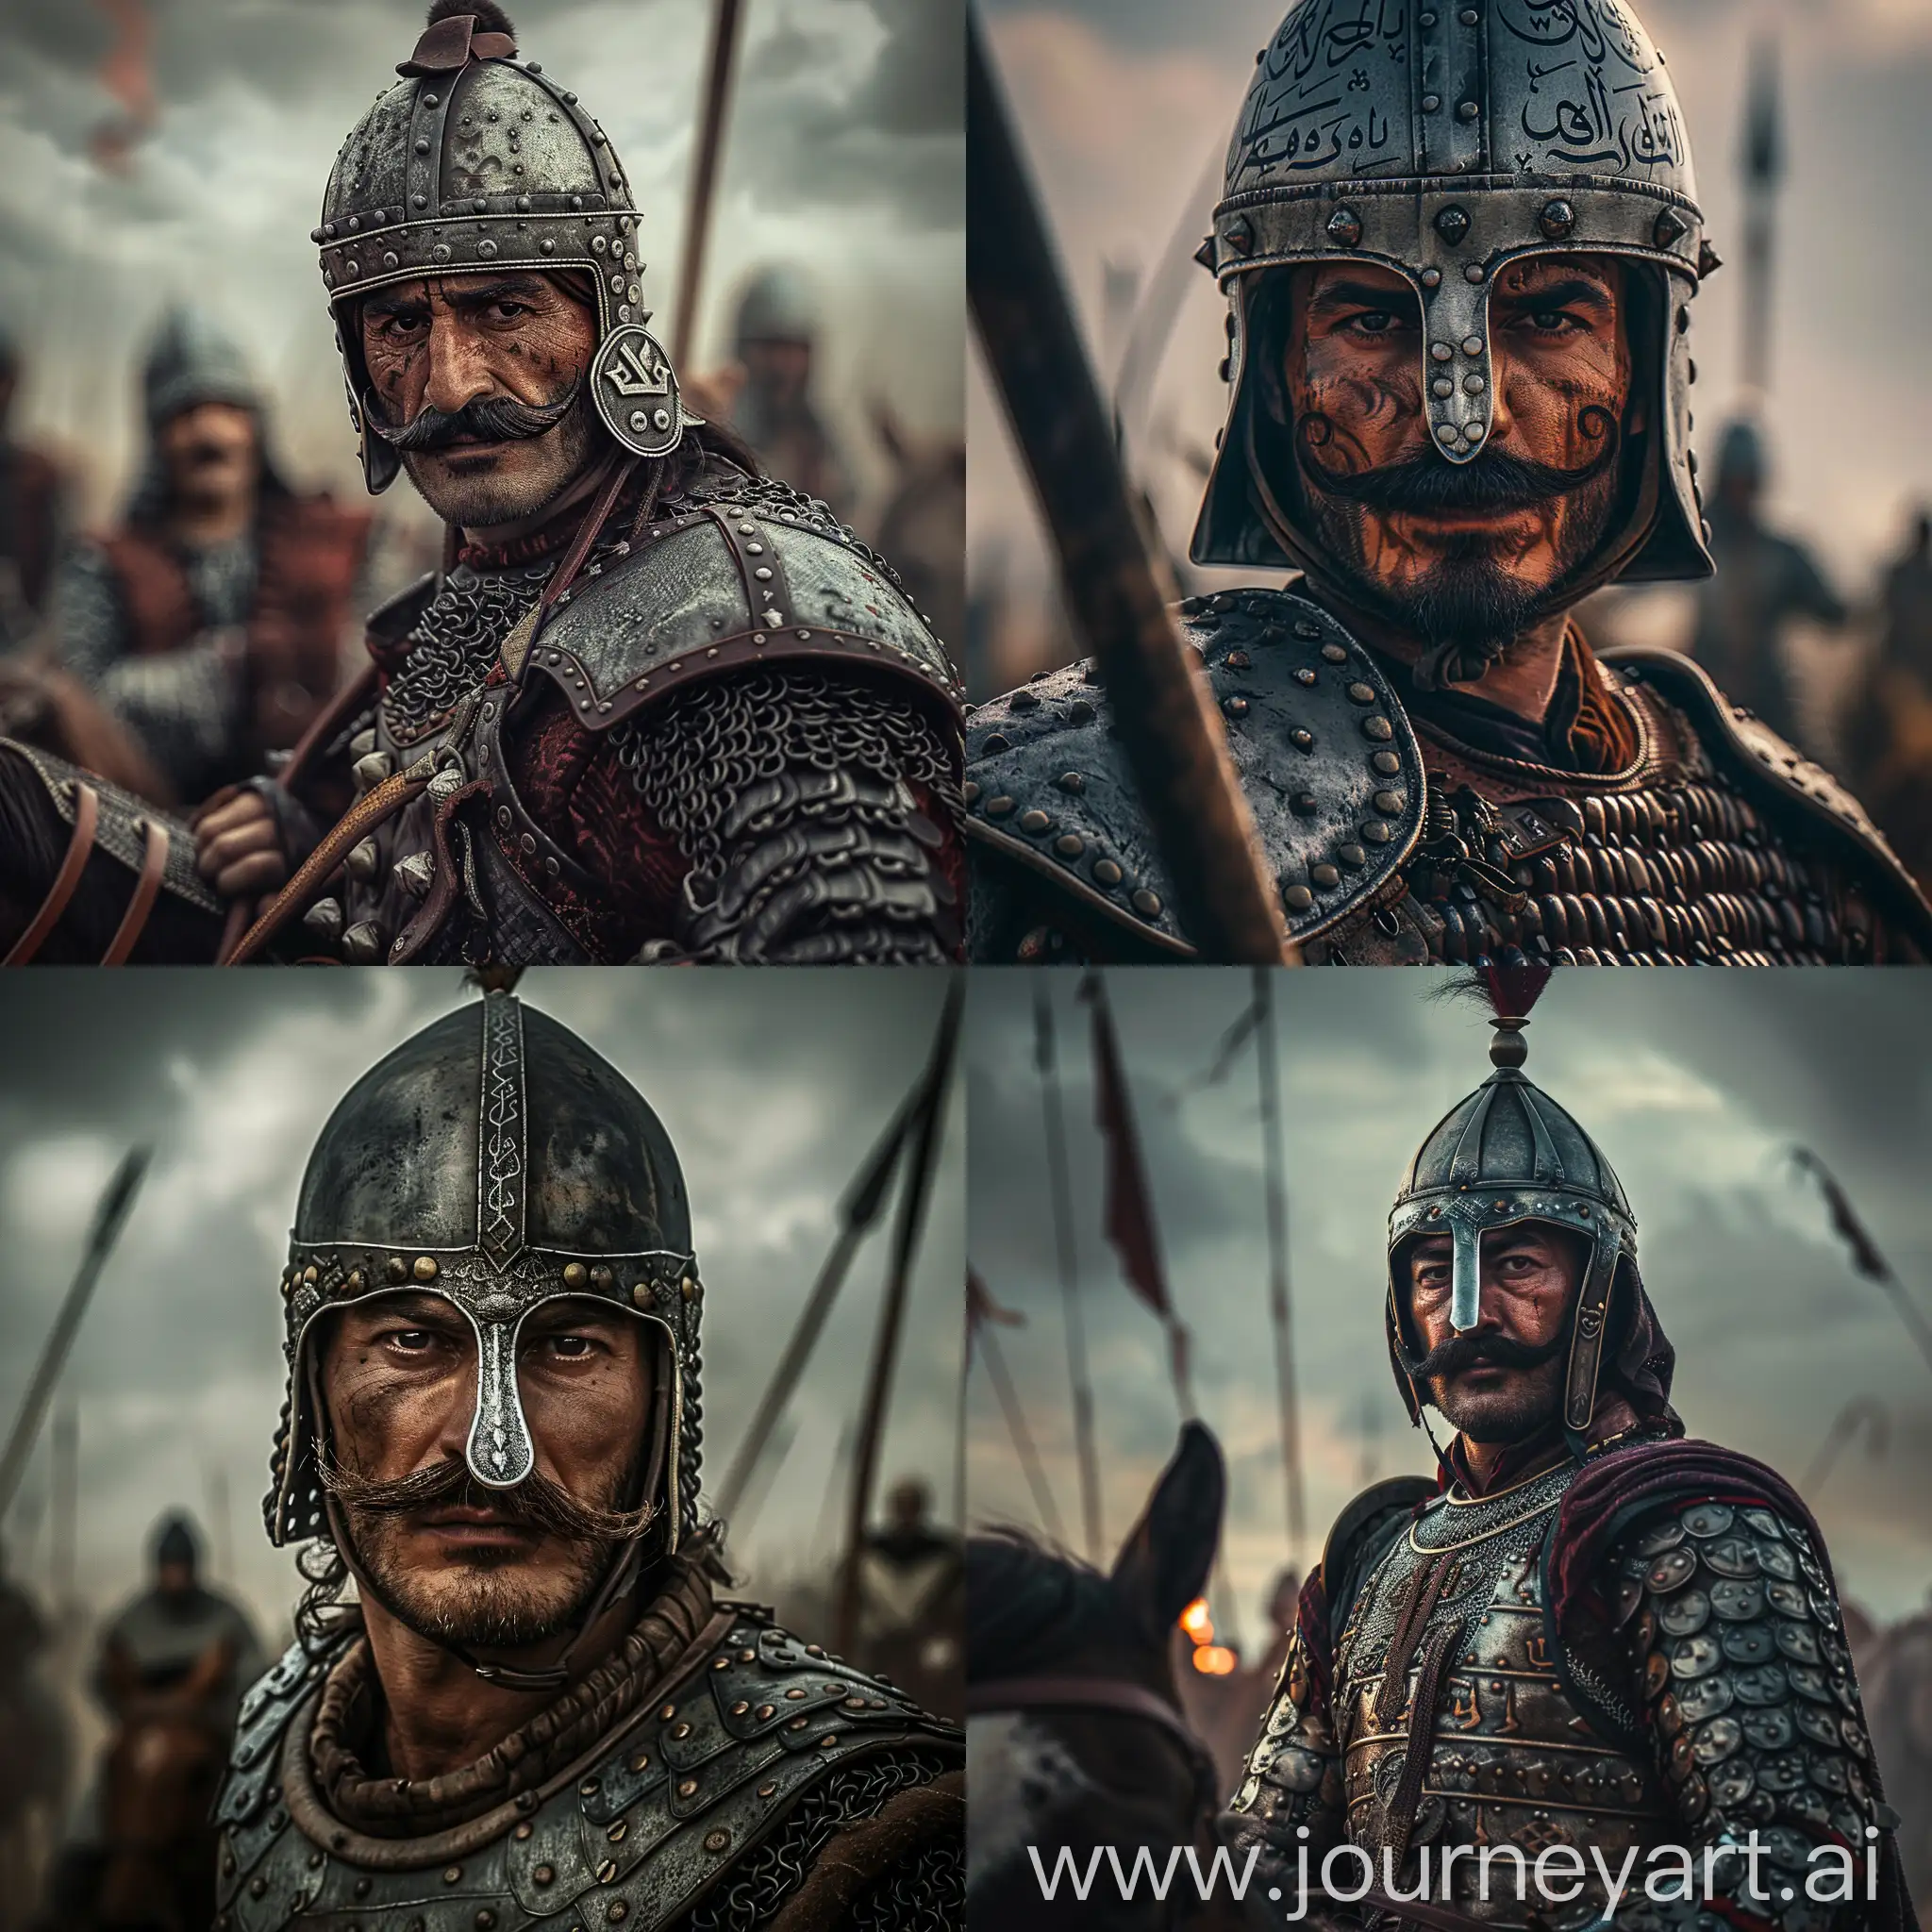 Alparslan-of-The-Great-Seljuk-Empire-in-Battle-Scene-on-Horseback